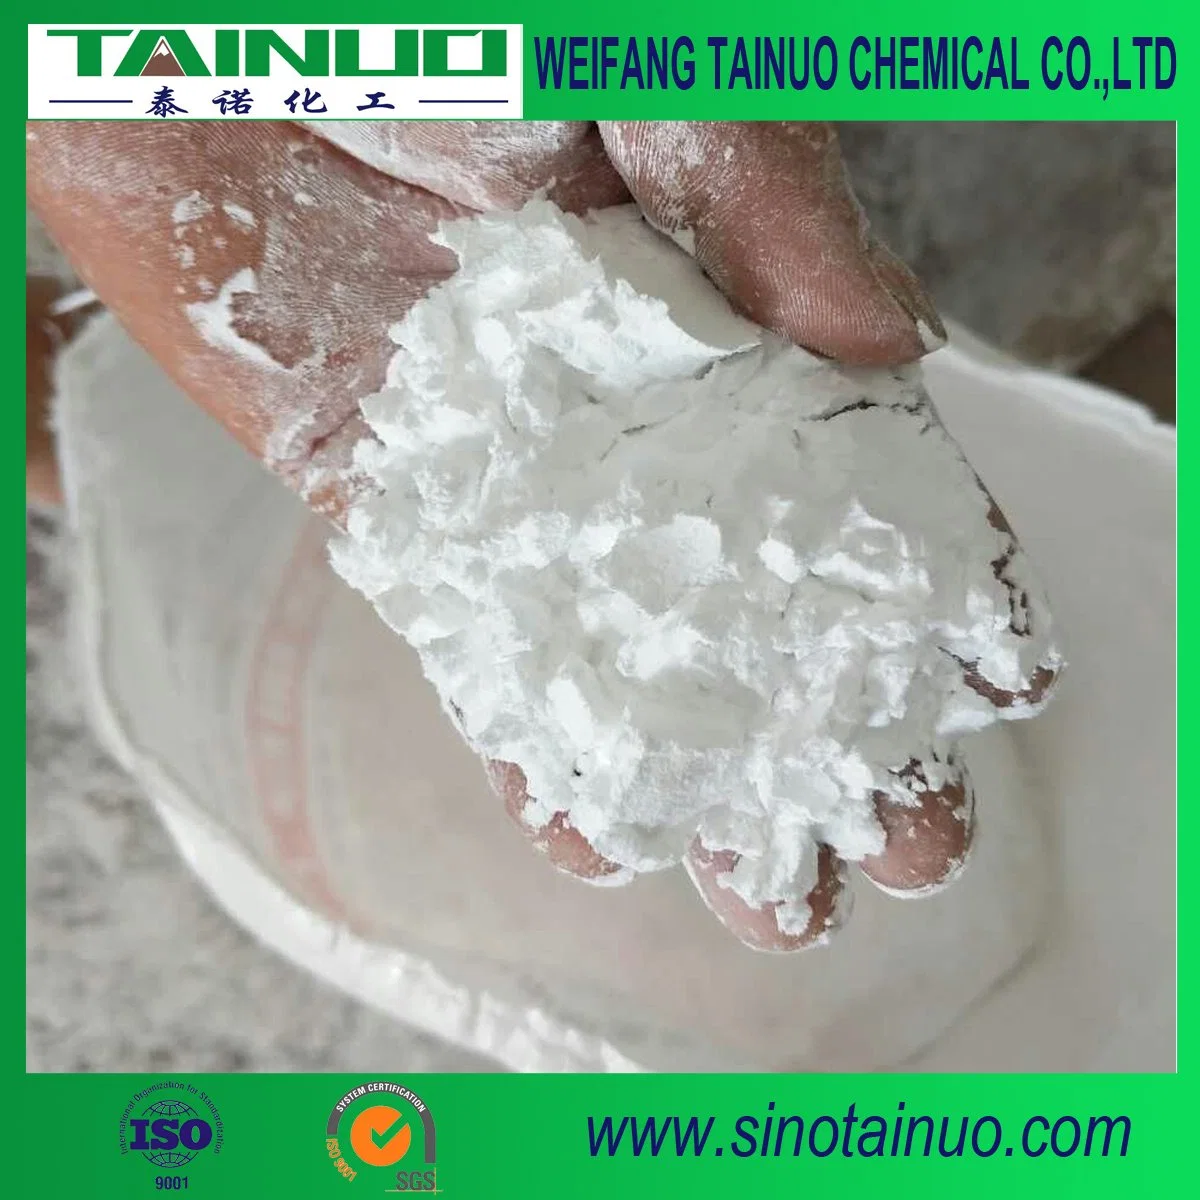 Industrial Grade Melamine Powder of 99.8% Purity, CAS: 108-78-1